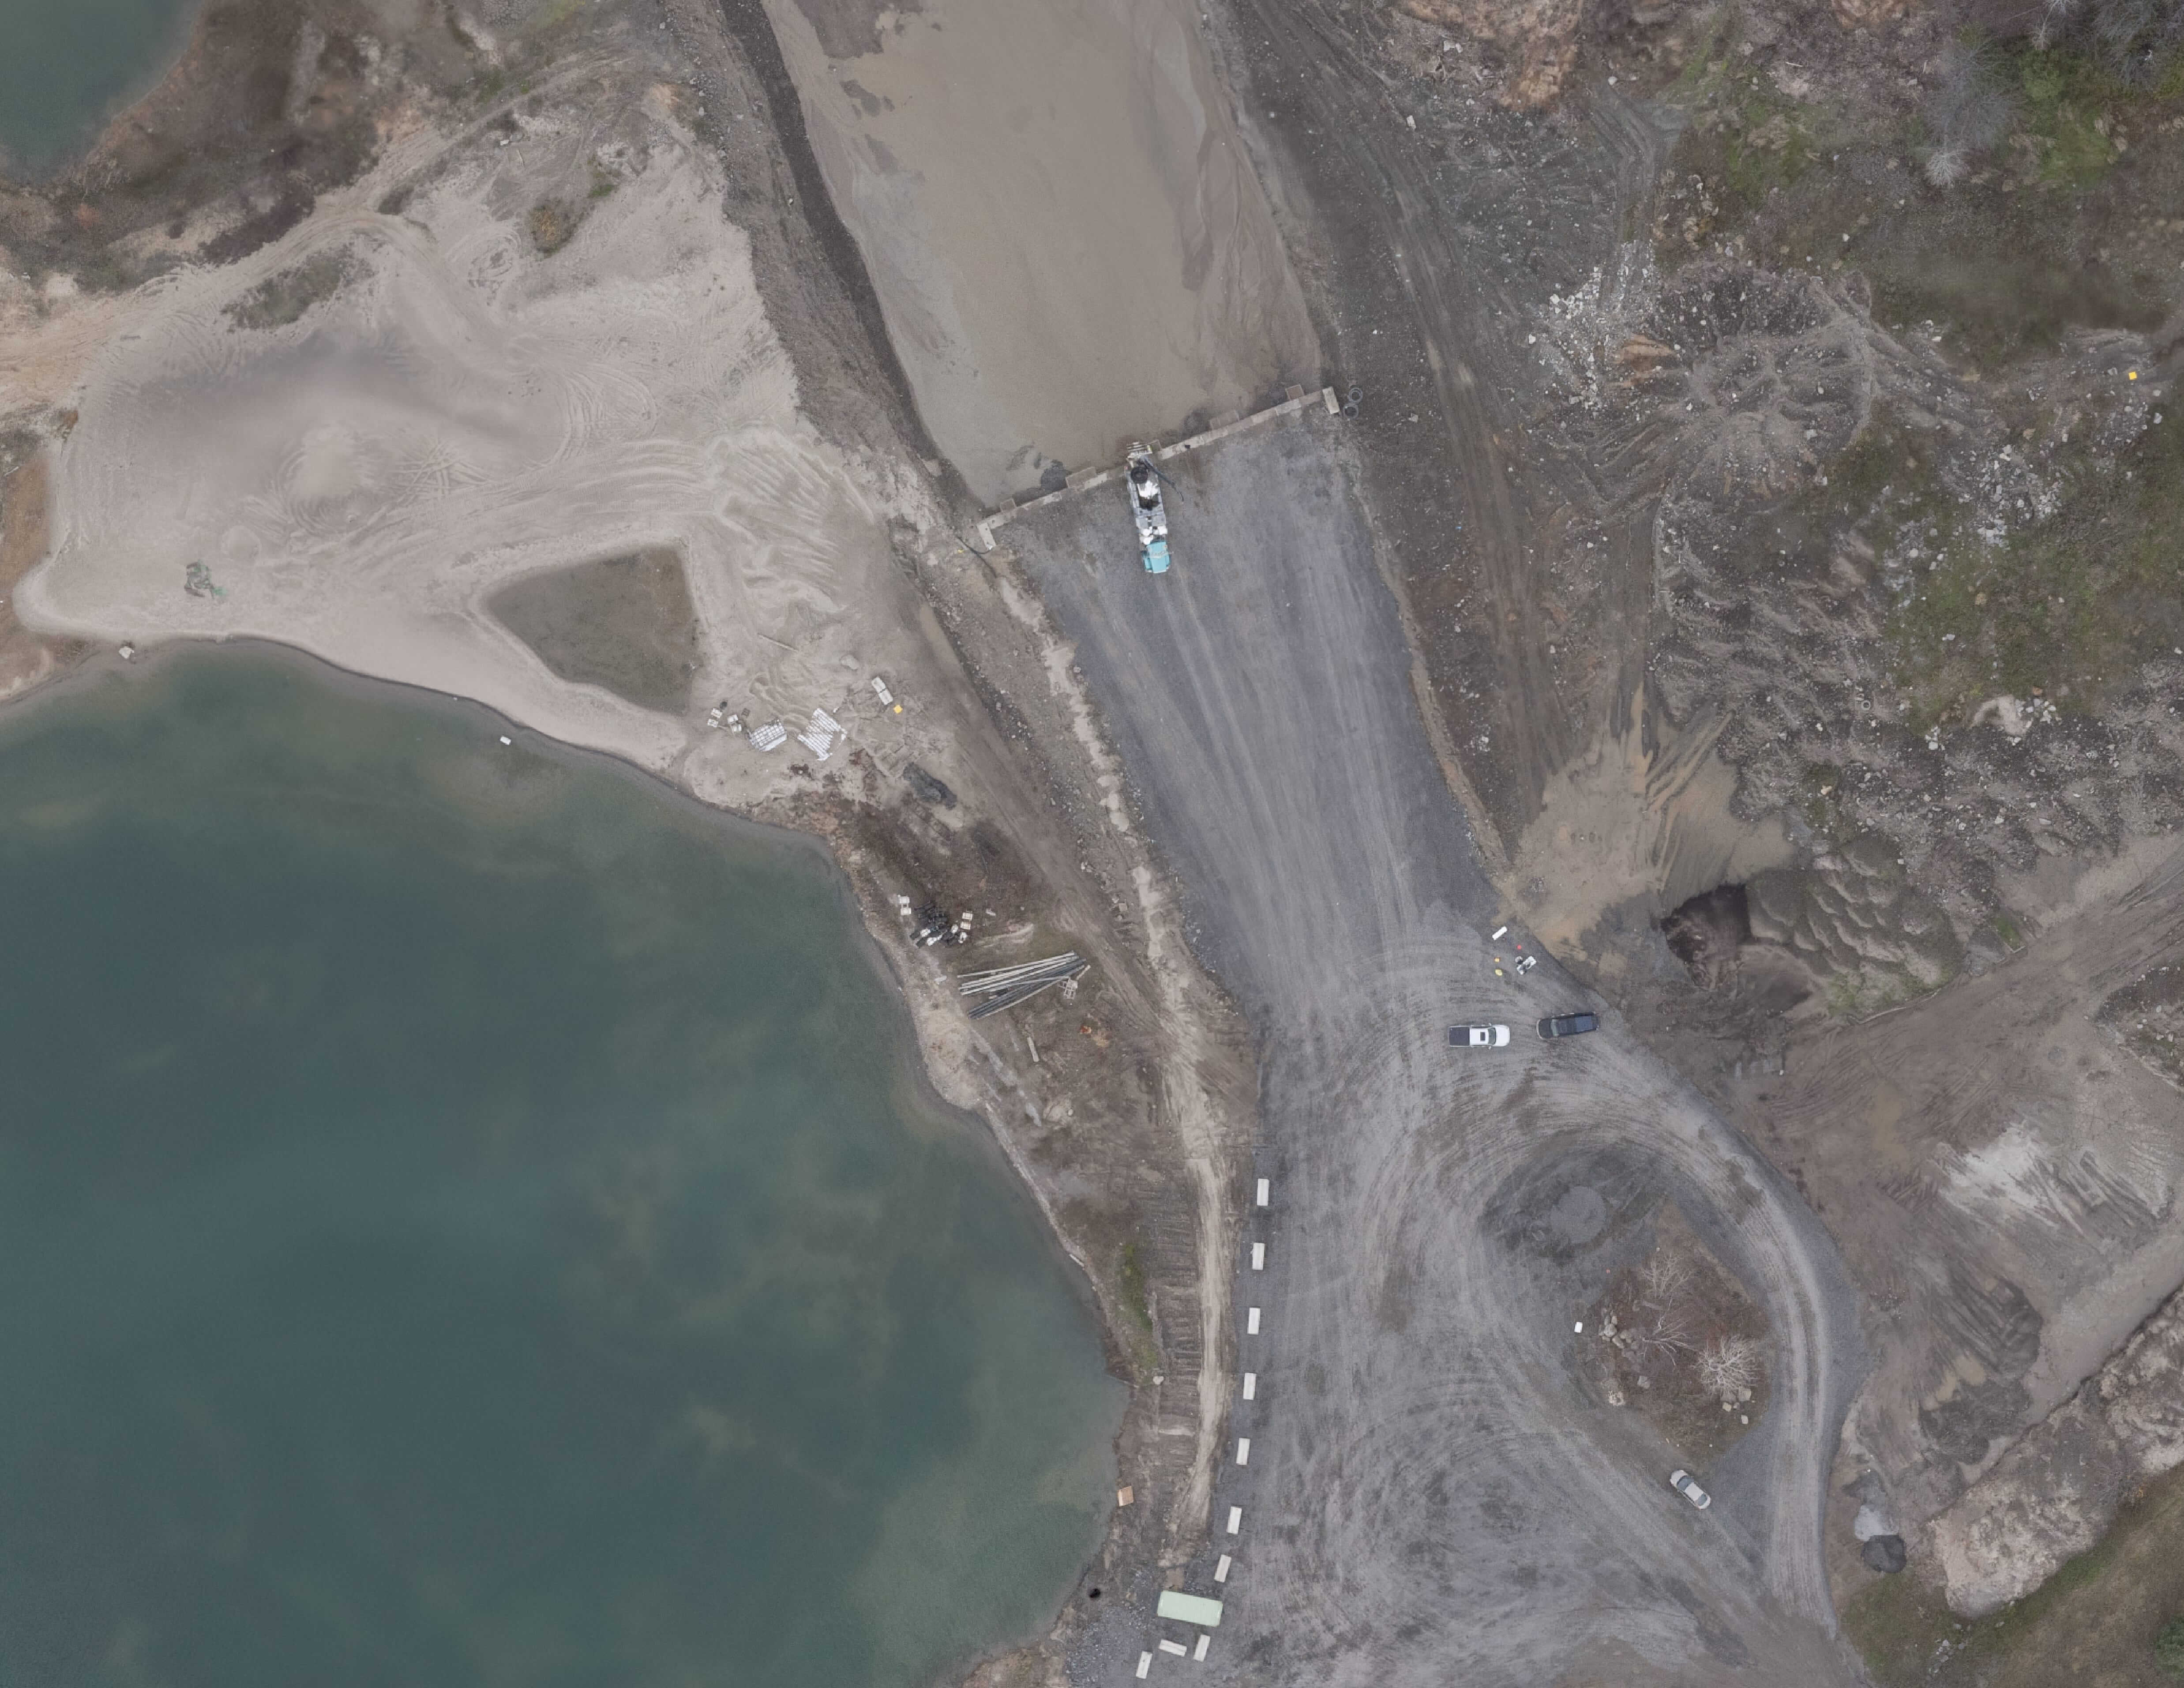 Environmental application of UAV through site mapping